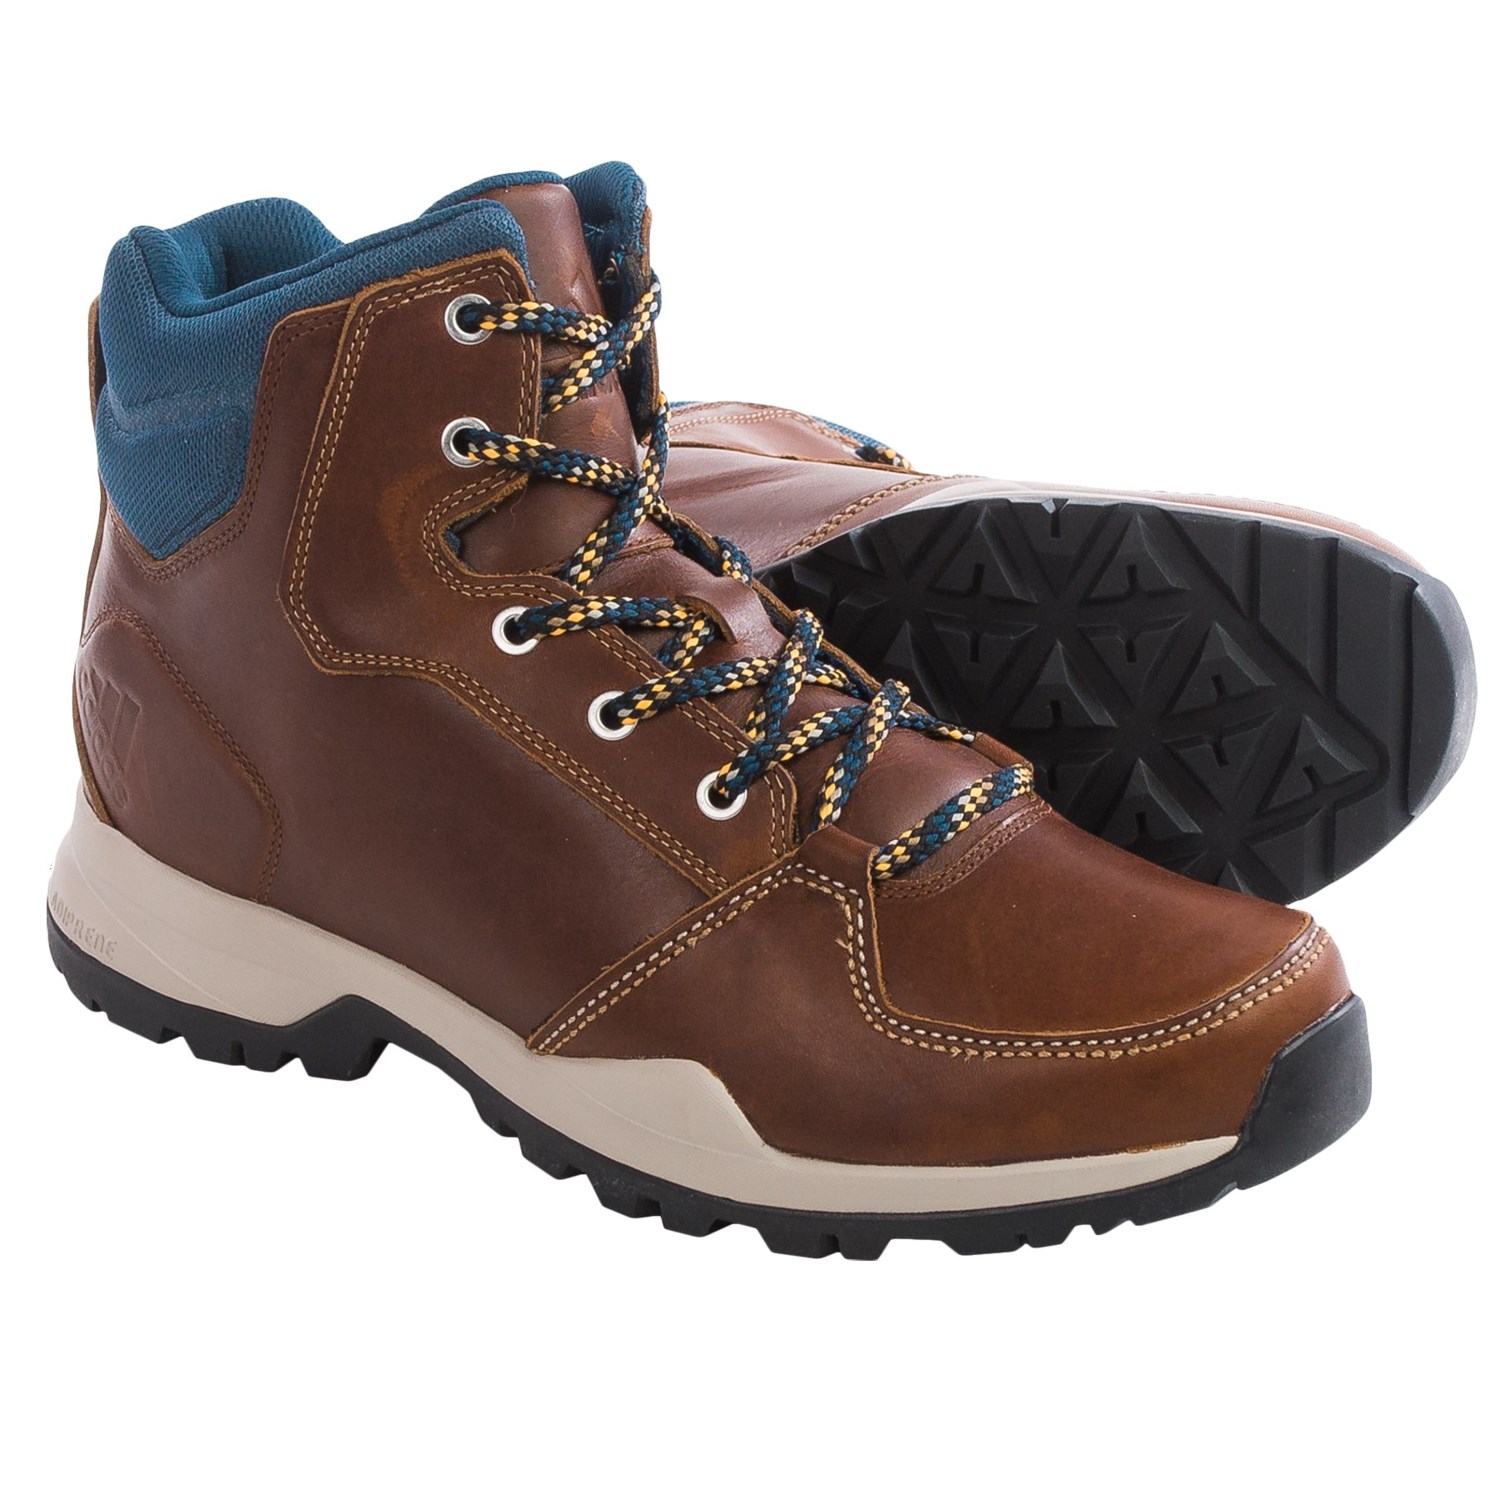 http://www.anrdoezrs.net/links/8058665/type/dlg/http://www.sierratradingpost.com/adidas-outdoor-rockstack-mid-boots-leather-for-men~p~133fg/?filterString=99~or(mens-casual-shoes~d~298%2Cmens-casual-sandals~d~296%2Cmens-casual-slip-ons~d~293%2Cmens-casual-boots~d~292%2Cmens-casual-socks~d~300)%2Fshoes~d~4%2Fmens-footwear~d~11%2Fclearance~1%2F